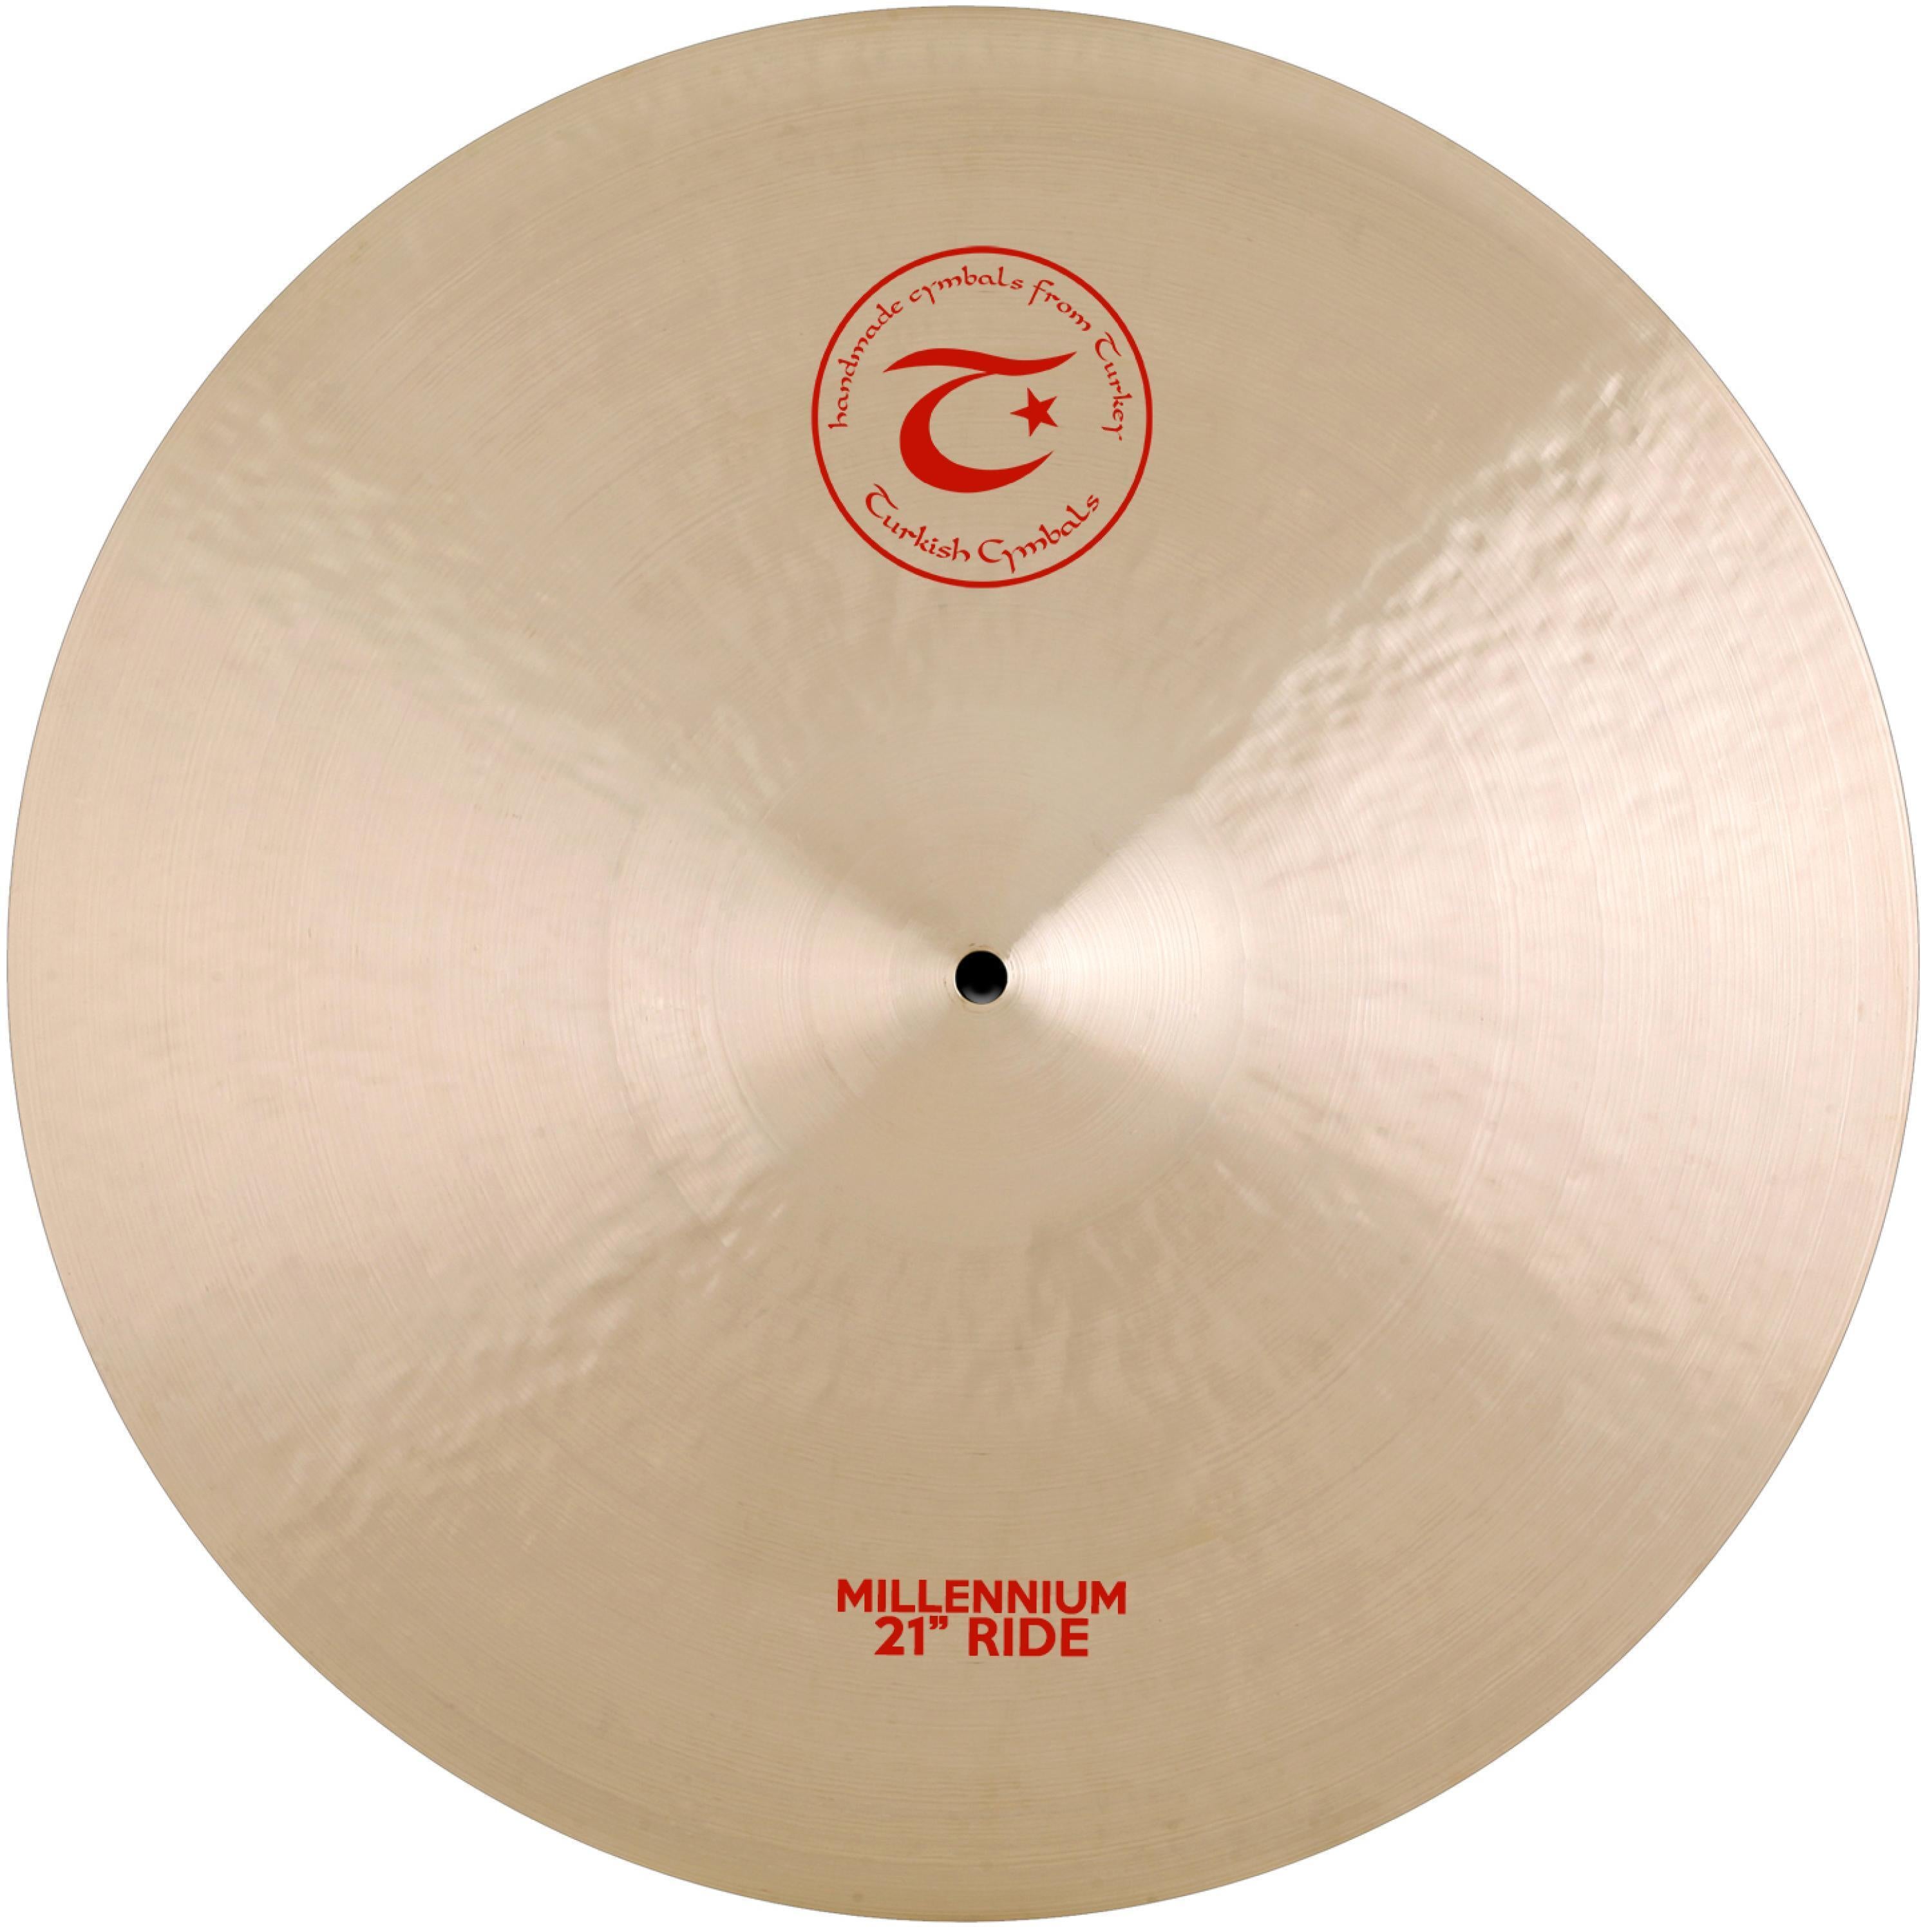 Turkish Cymbals Millennium Ride Cymbal - 21 inch